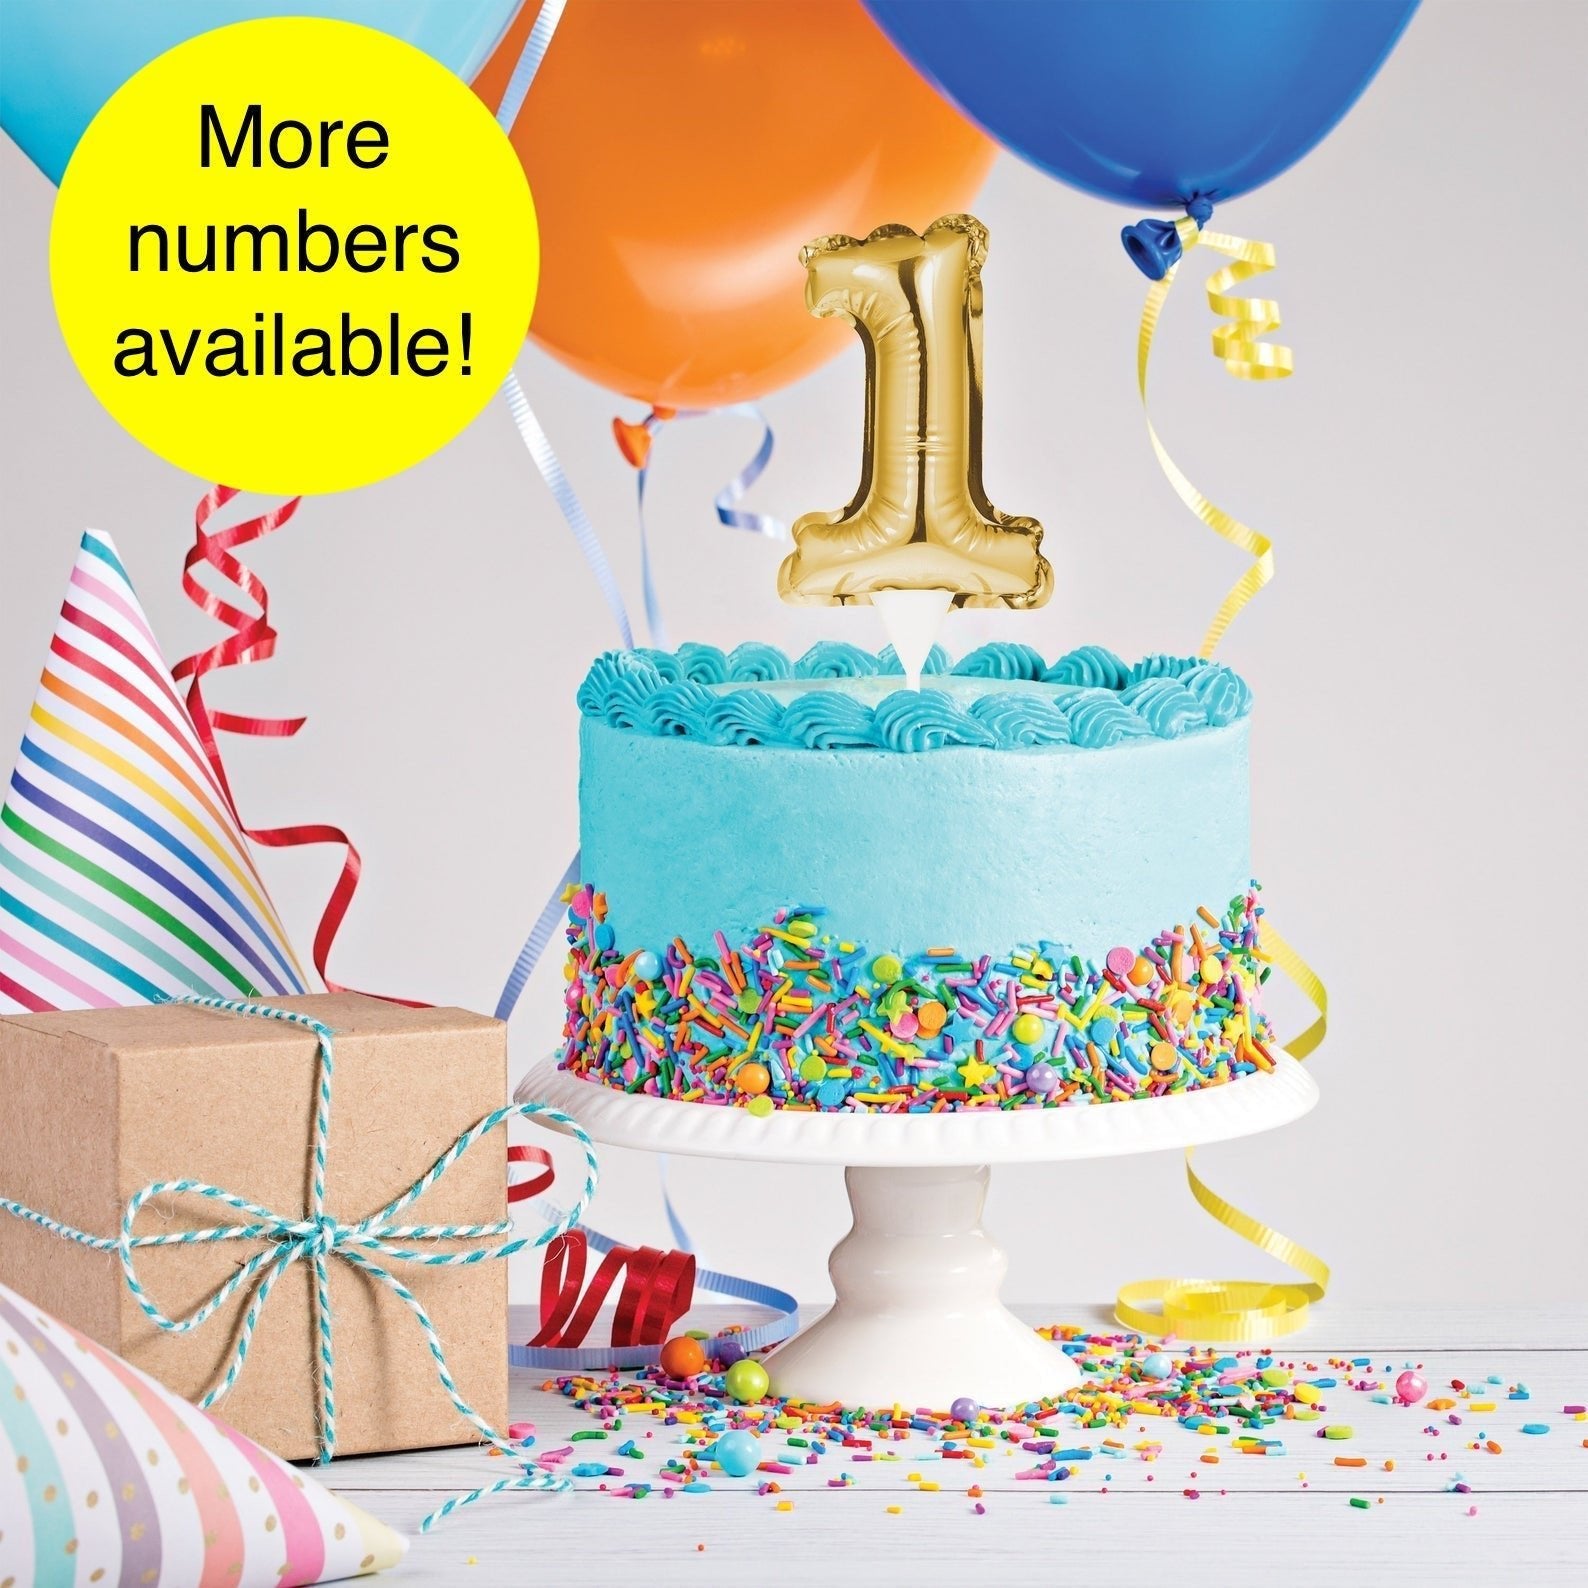 Happy Golden Birthday Cake Topper, Happy Birthday, 25th Birthday, 50th  Birthday, Gold Glitter Cake Topper 